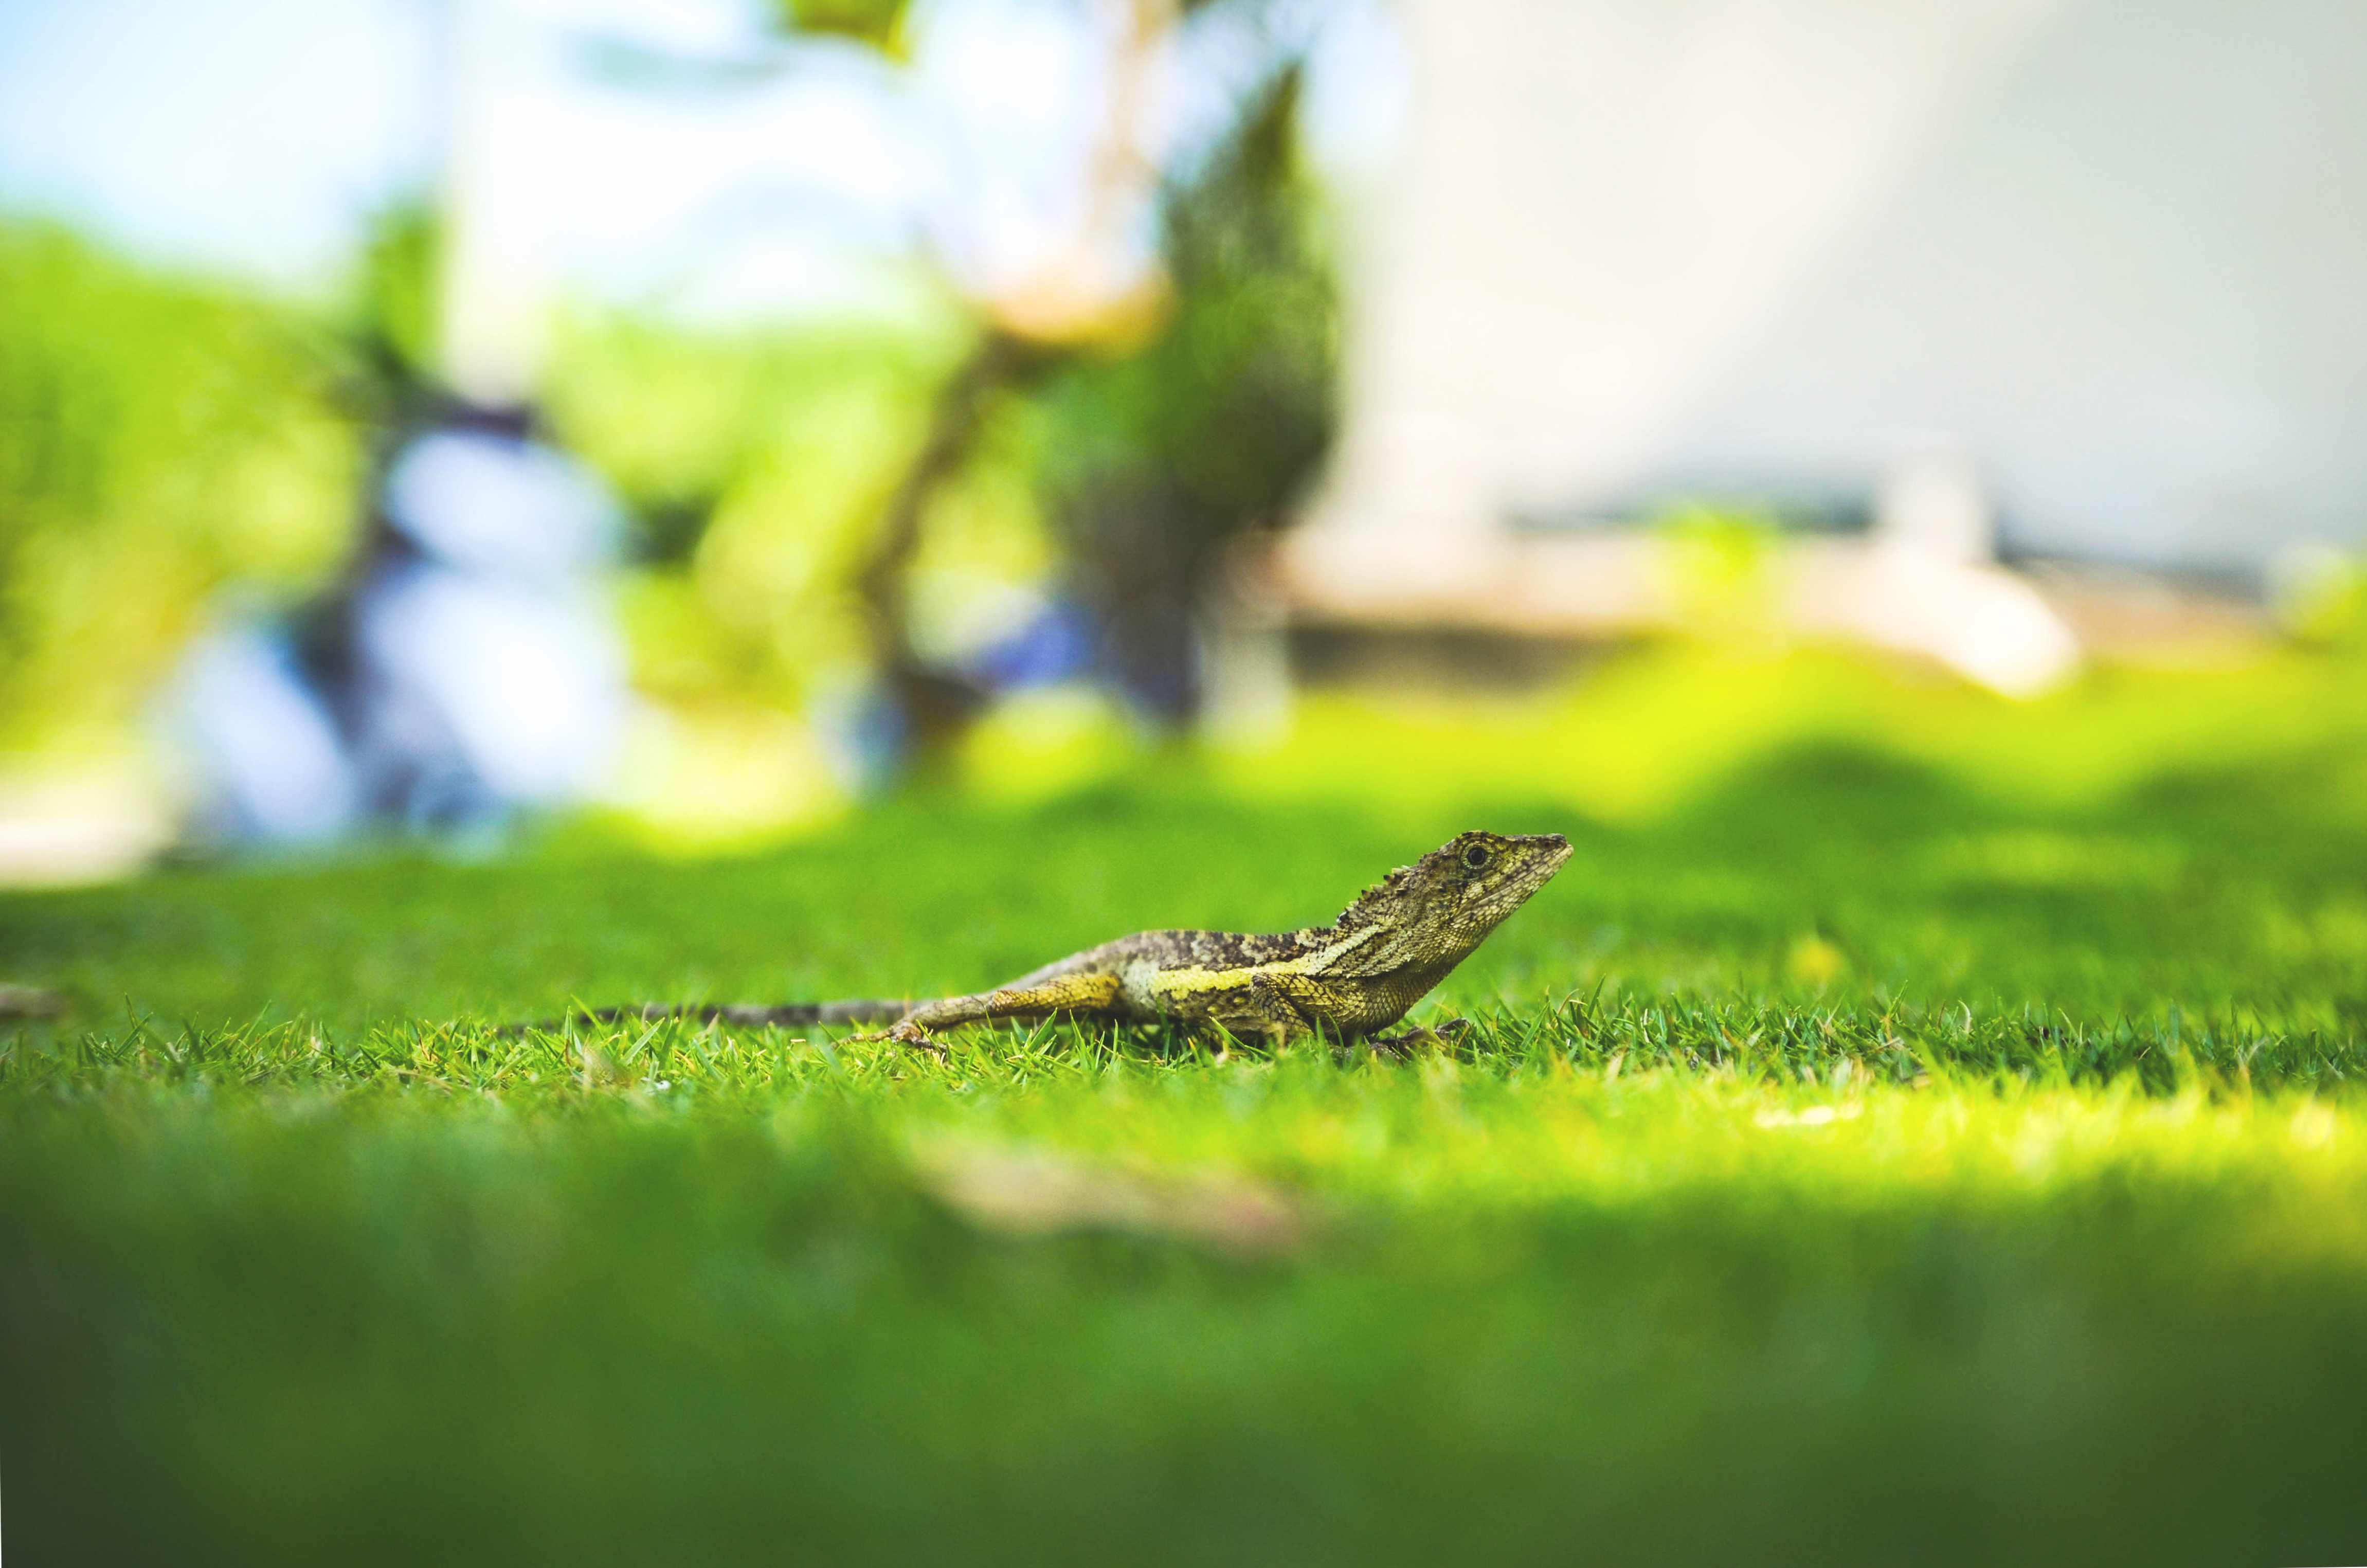 Lizard on grassy lawn photo